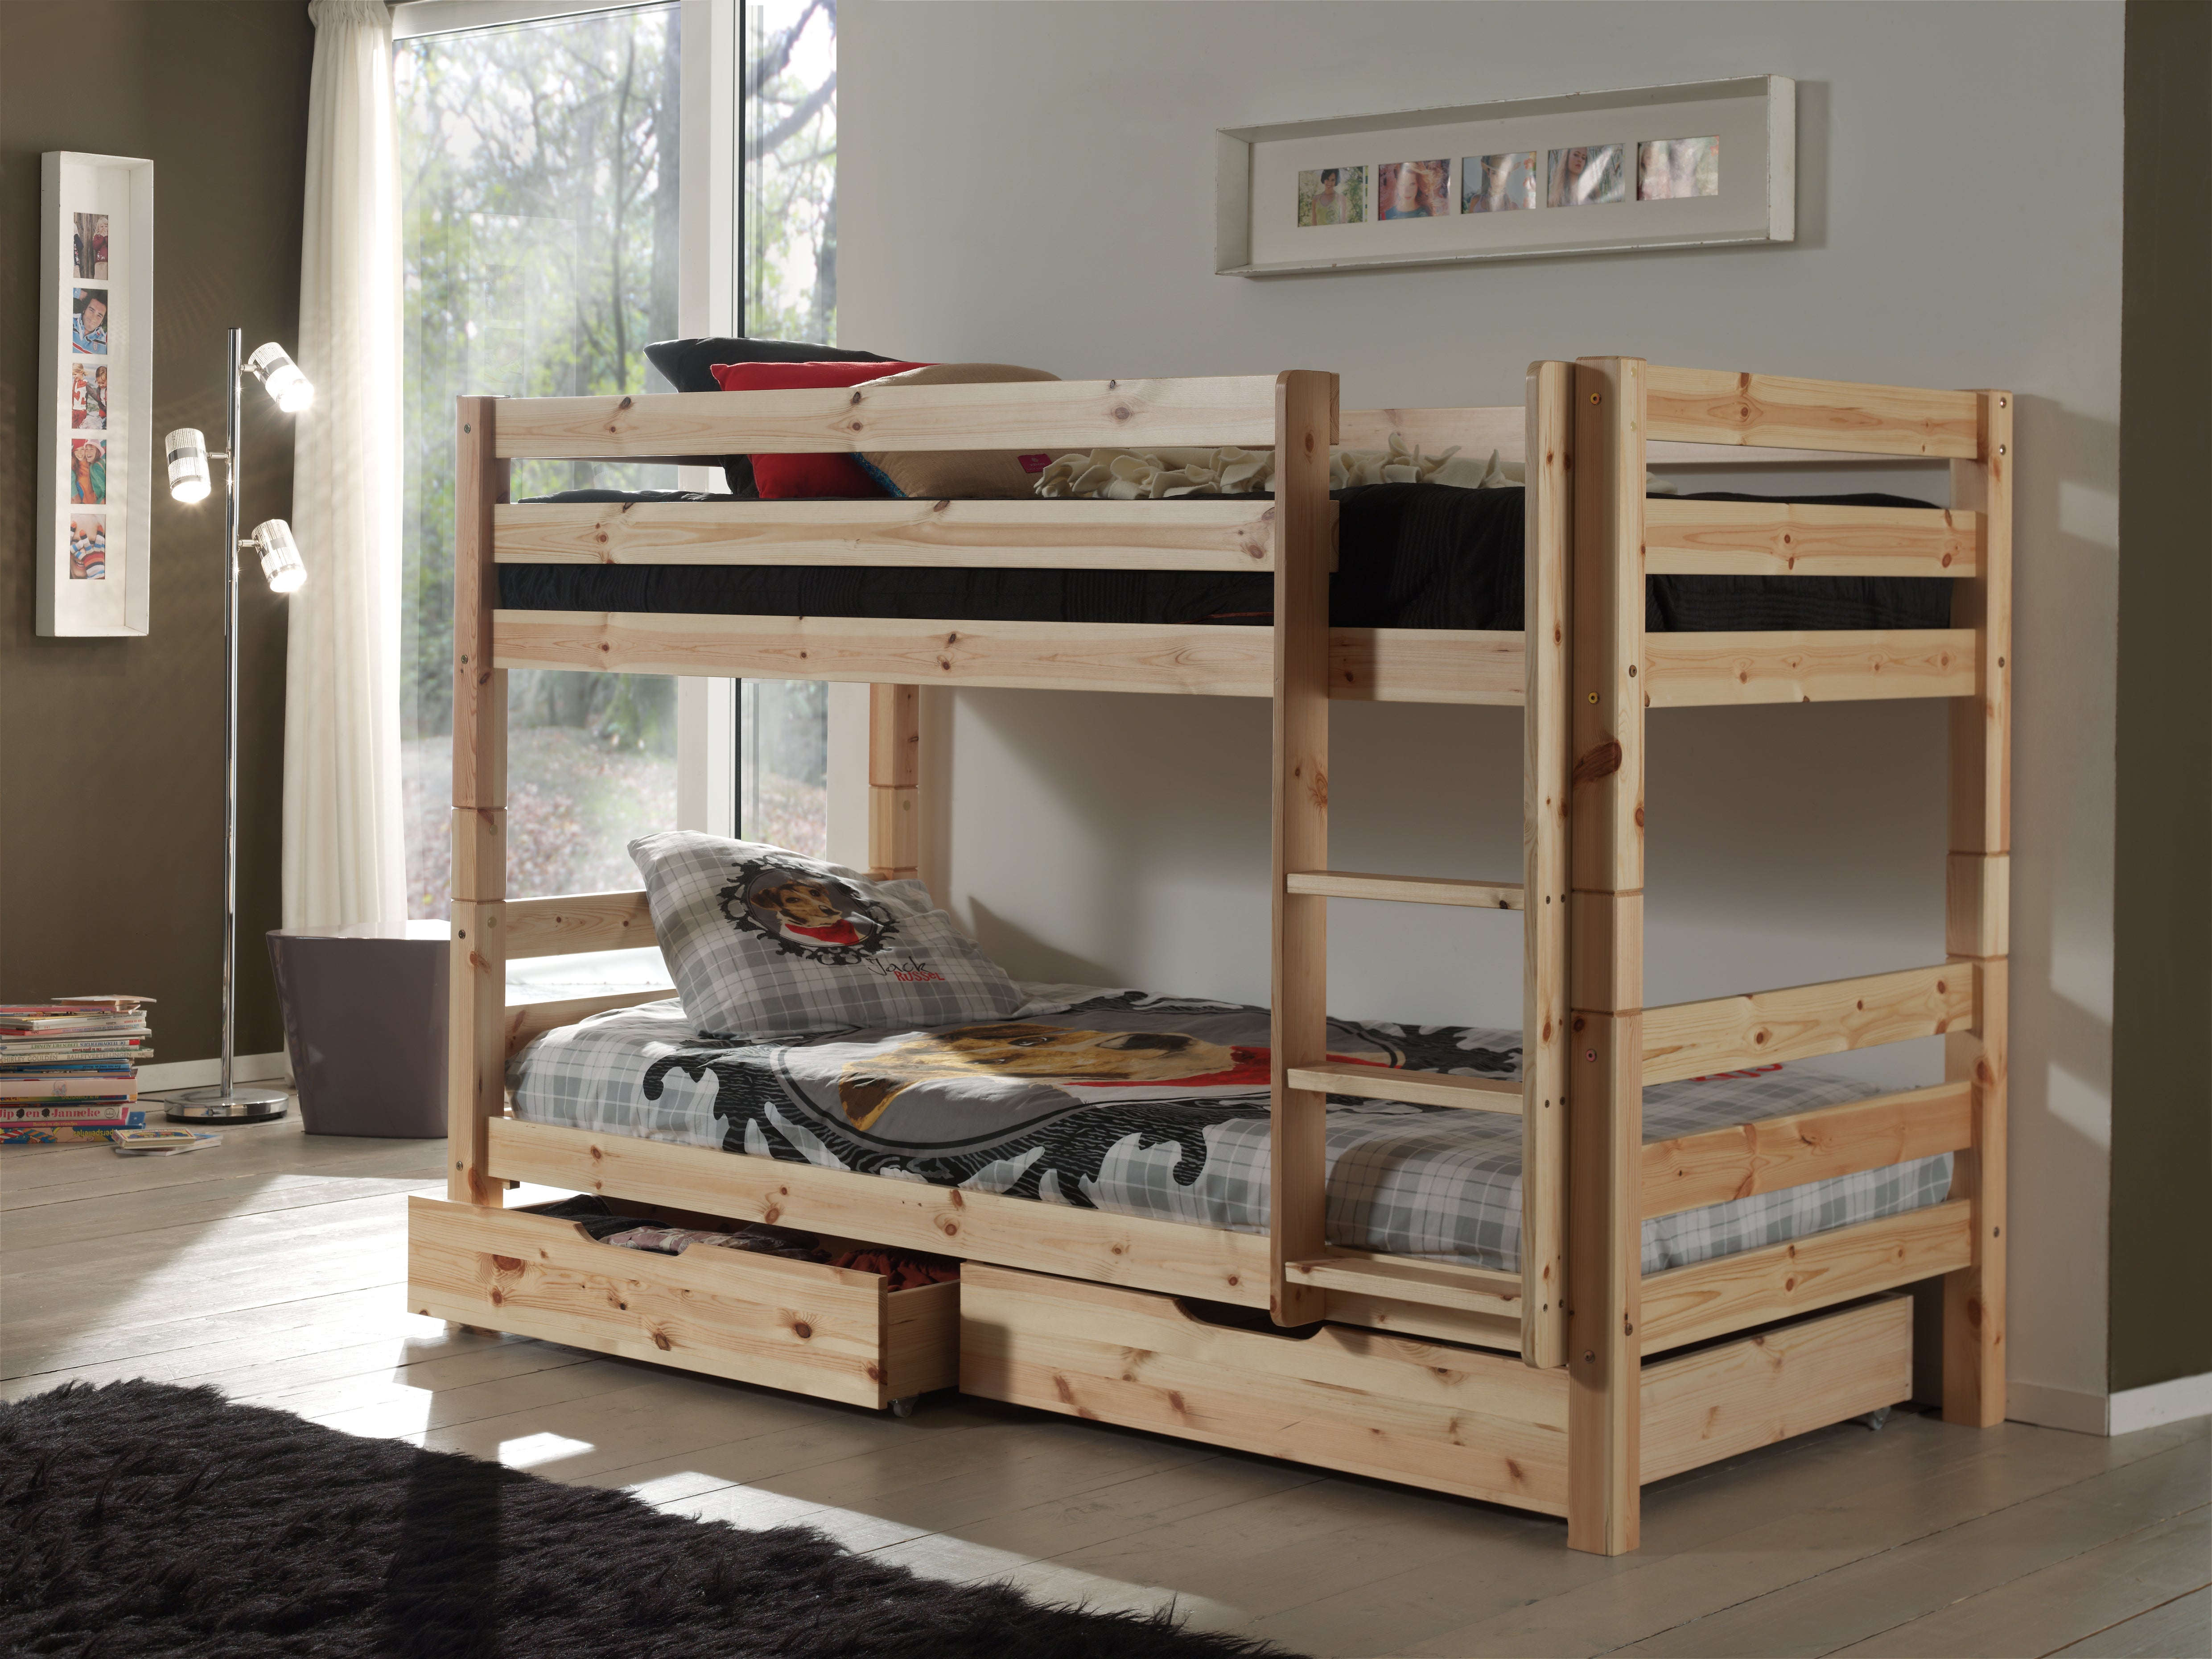 Vipack Pino Kids Bunk Bed 140cm Height - Natural Wood